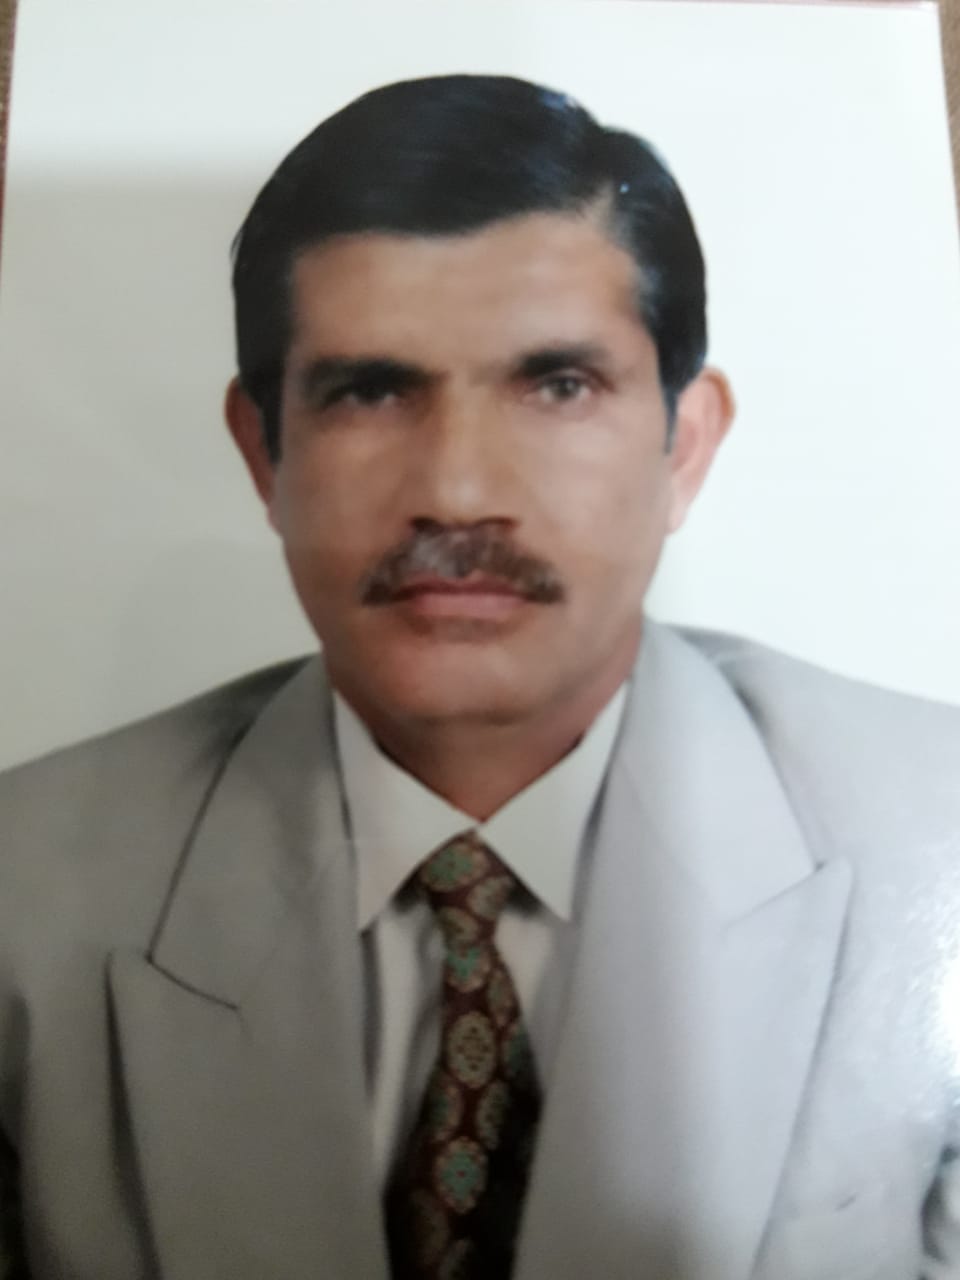 Sadiq Jafar Mhmed